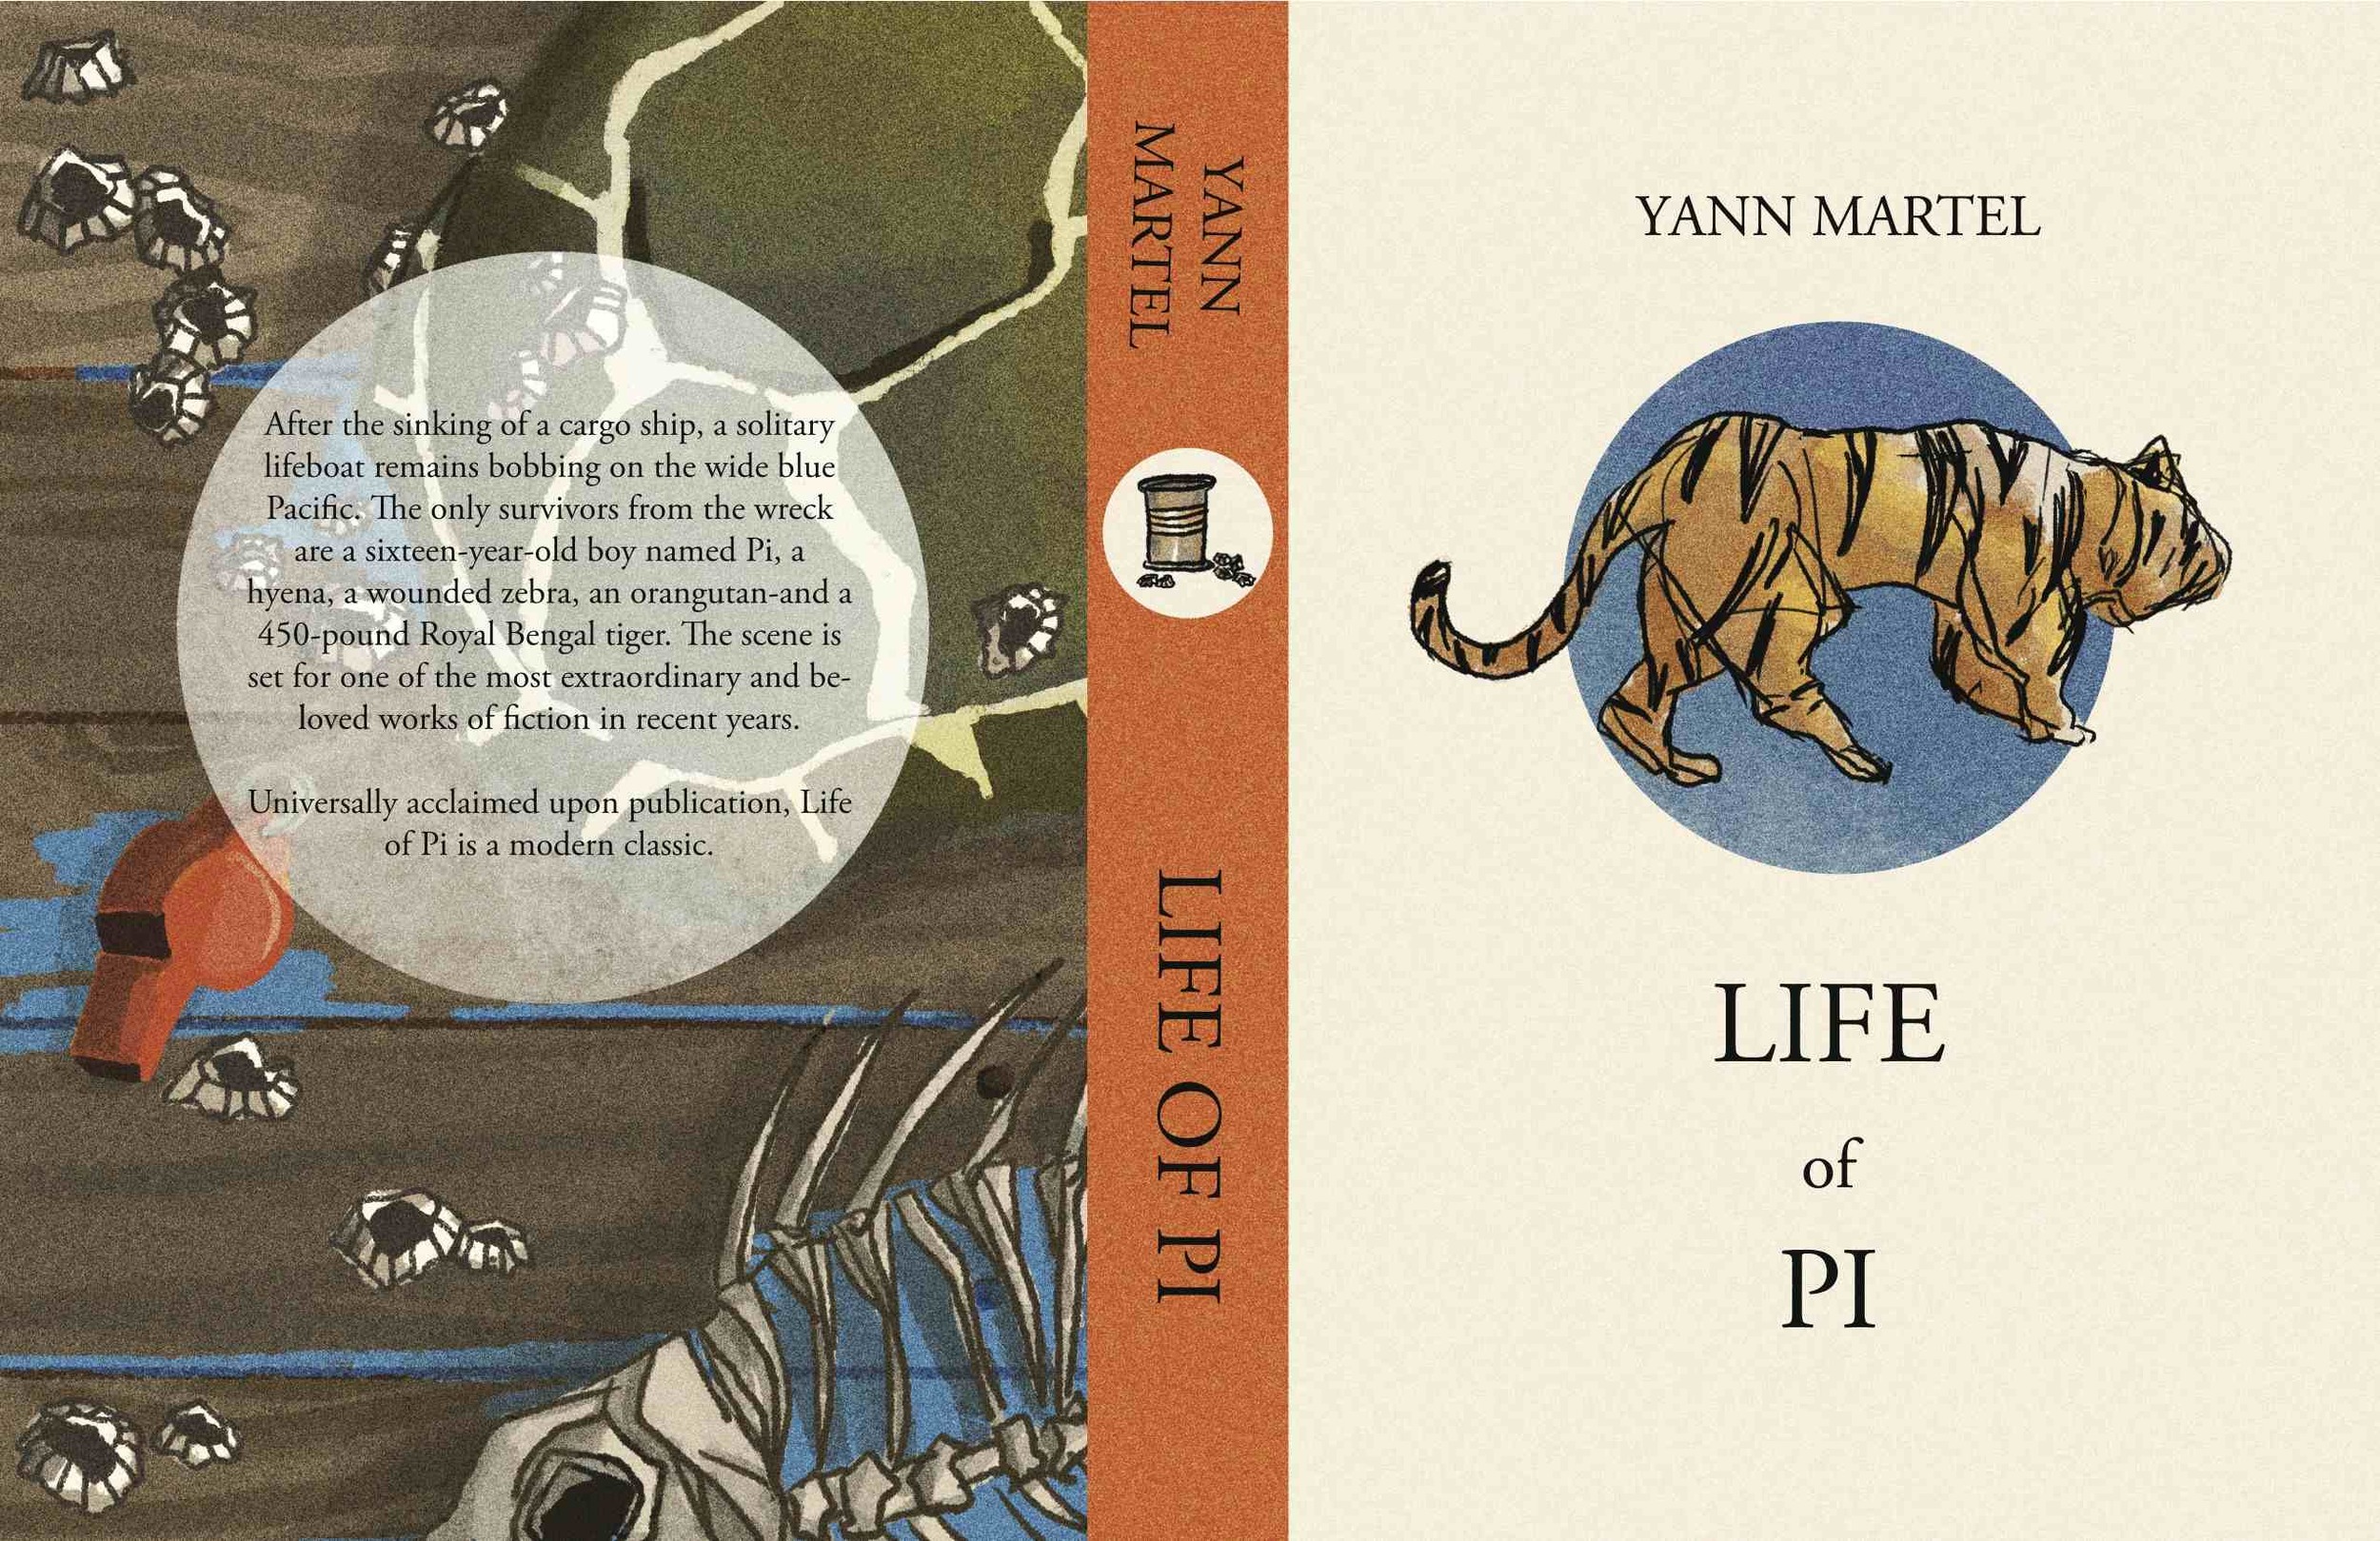  2016 SCHOLASTIC CALIFORNIA REGIONAL AWARDS-SILVER KEY WINNER  Book cover redesign for the novel  Life of Pi  by Yann Martel.&nbsp; 